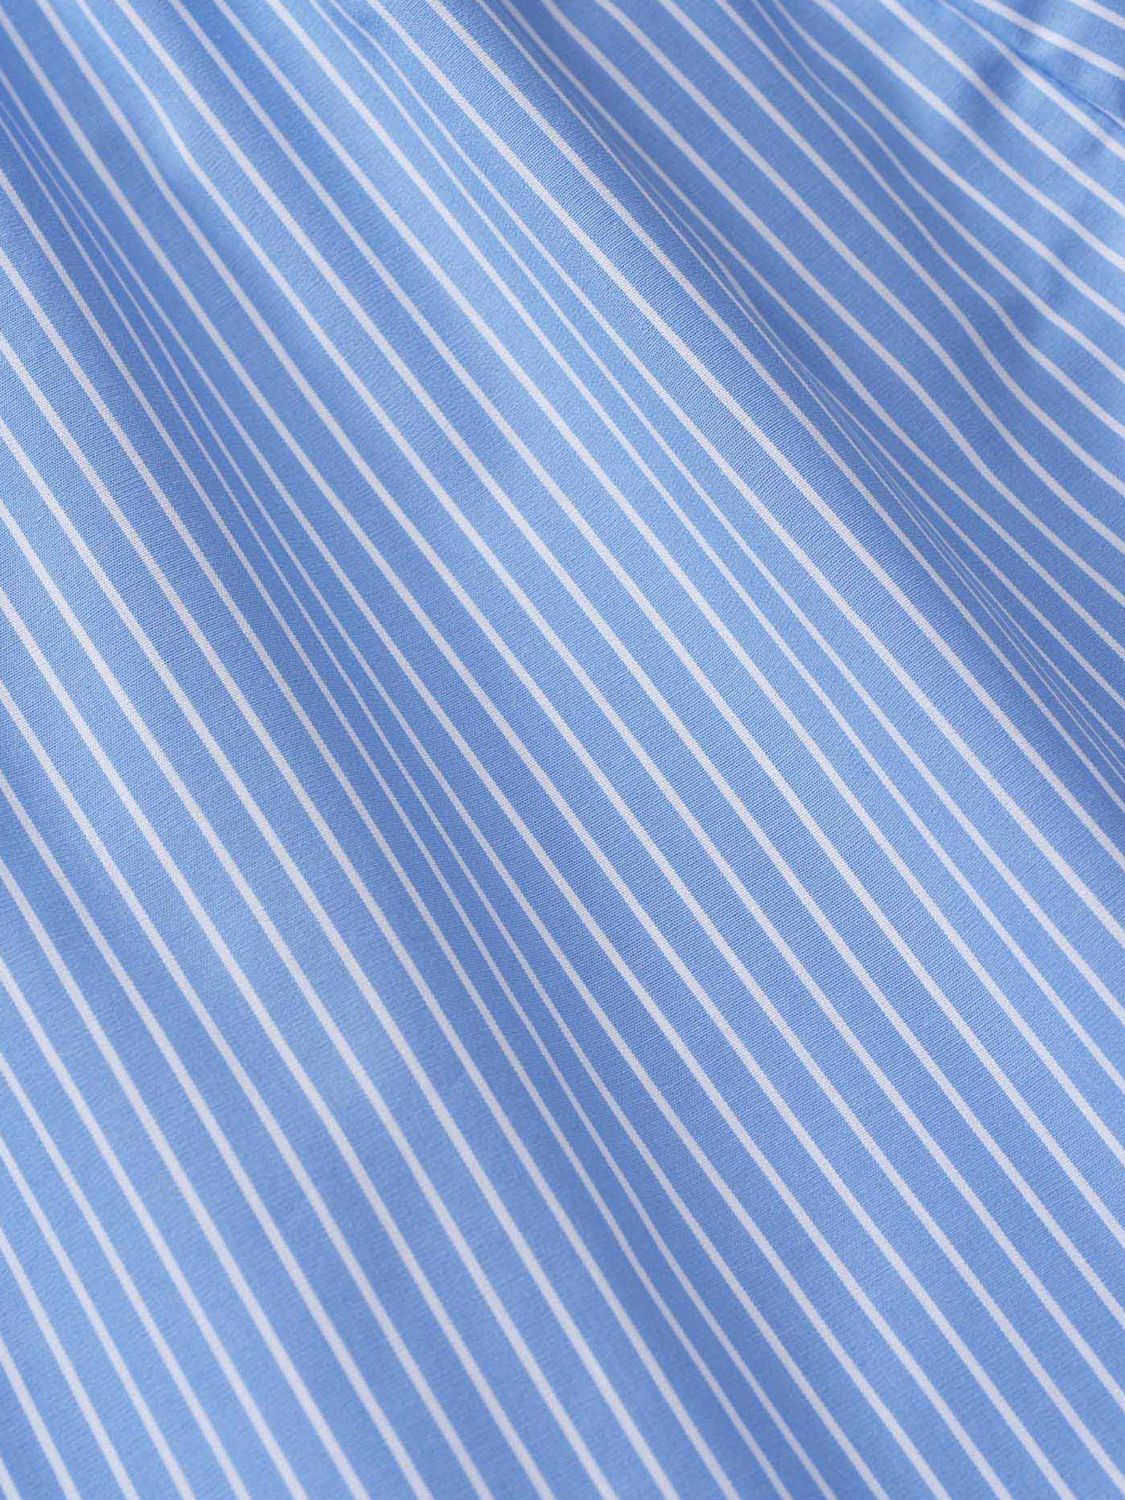 British Boxers Stripe Crisp Cotton Sleep Shorts, Light Blue Stripe, S